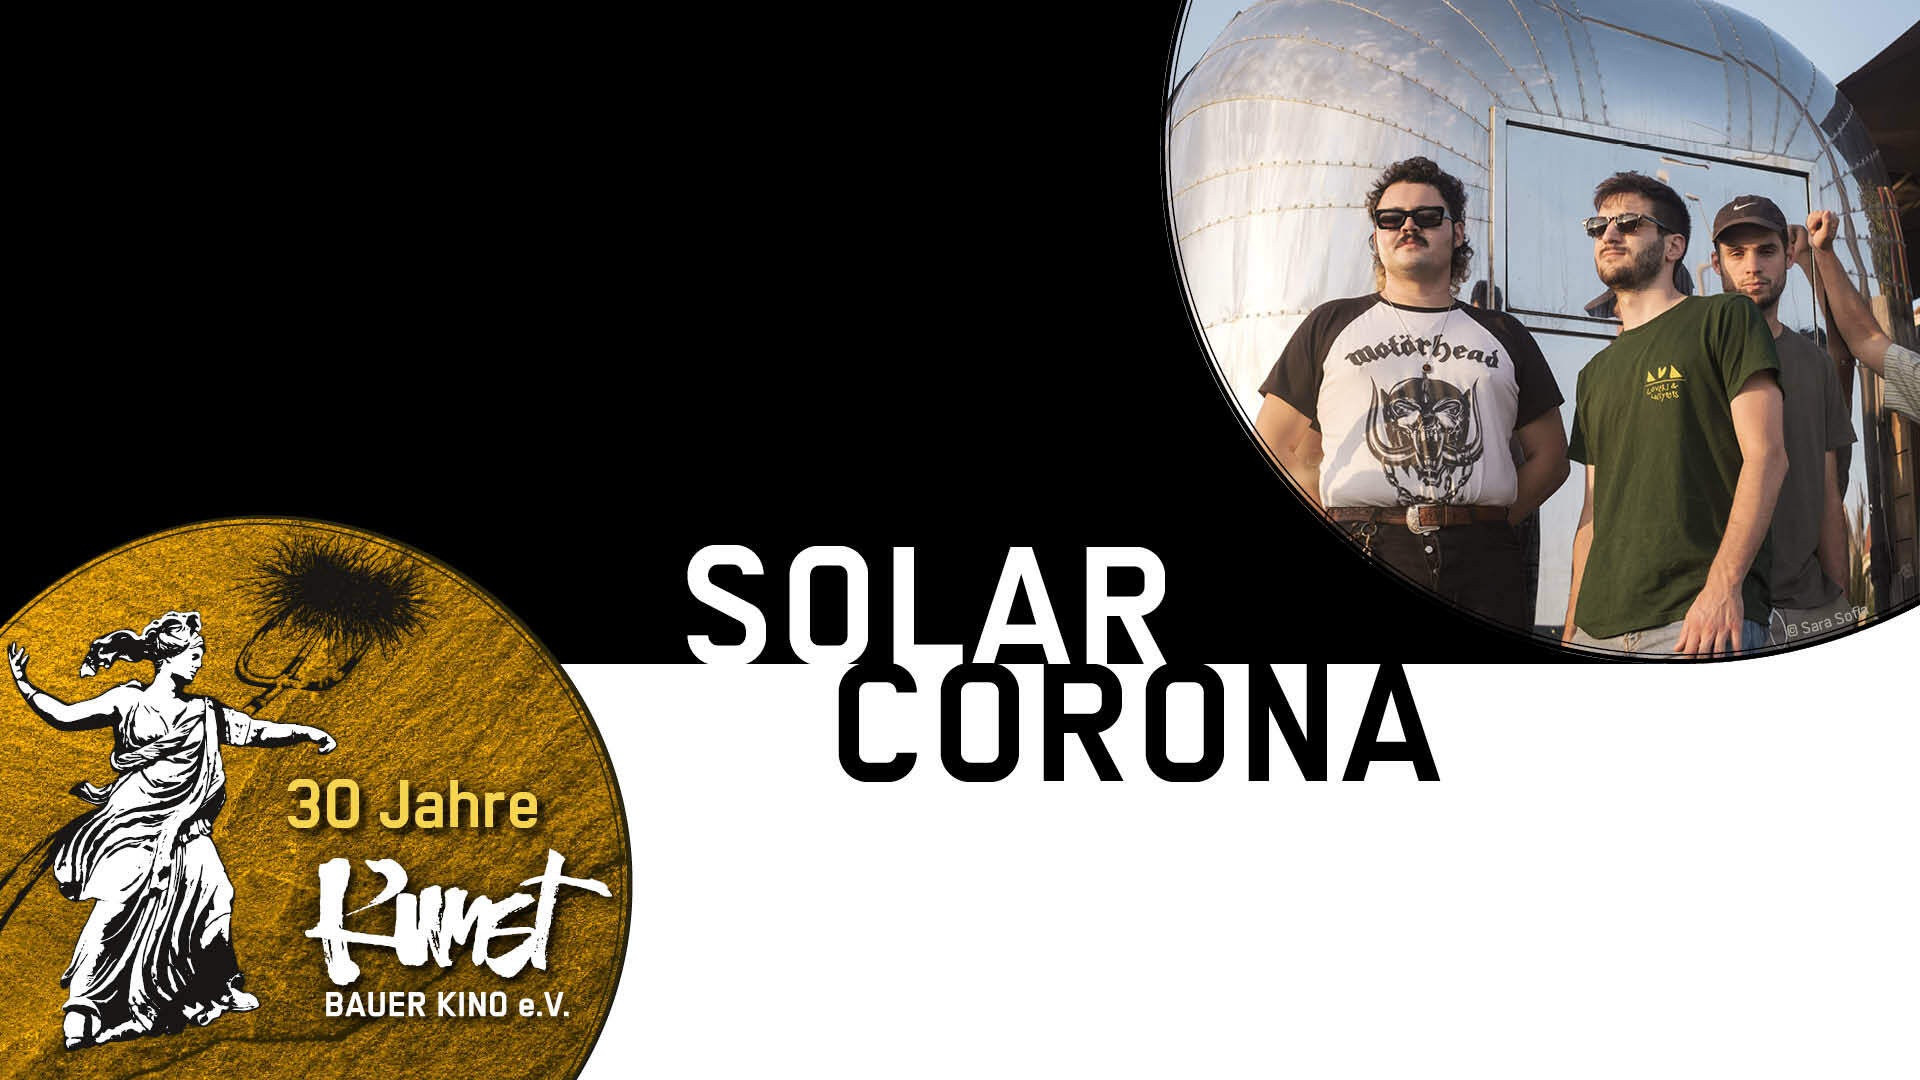 30 Jahre KBK Facebook Solar Corona